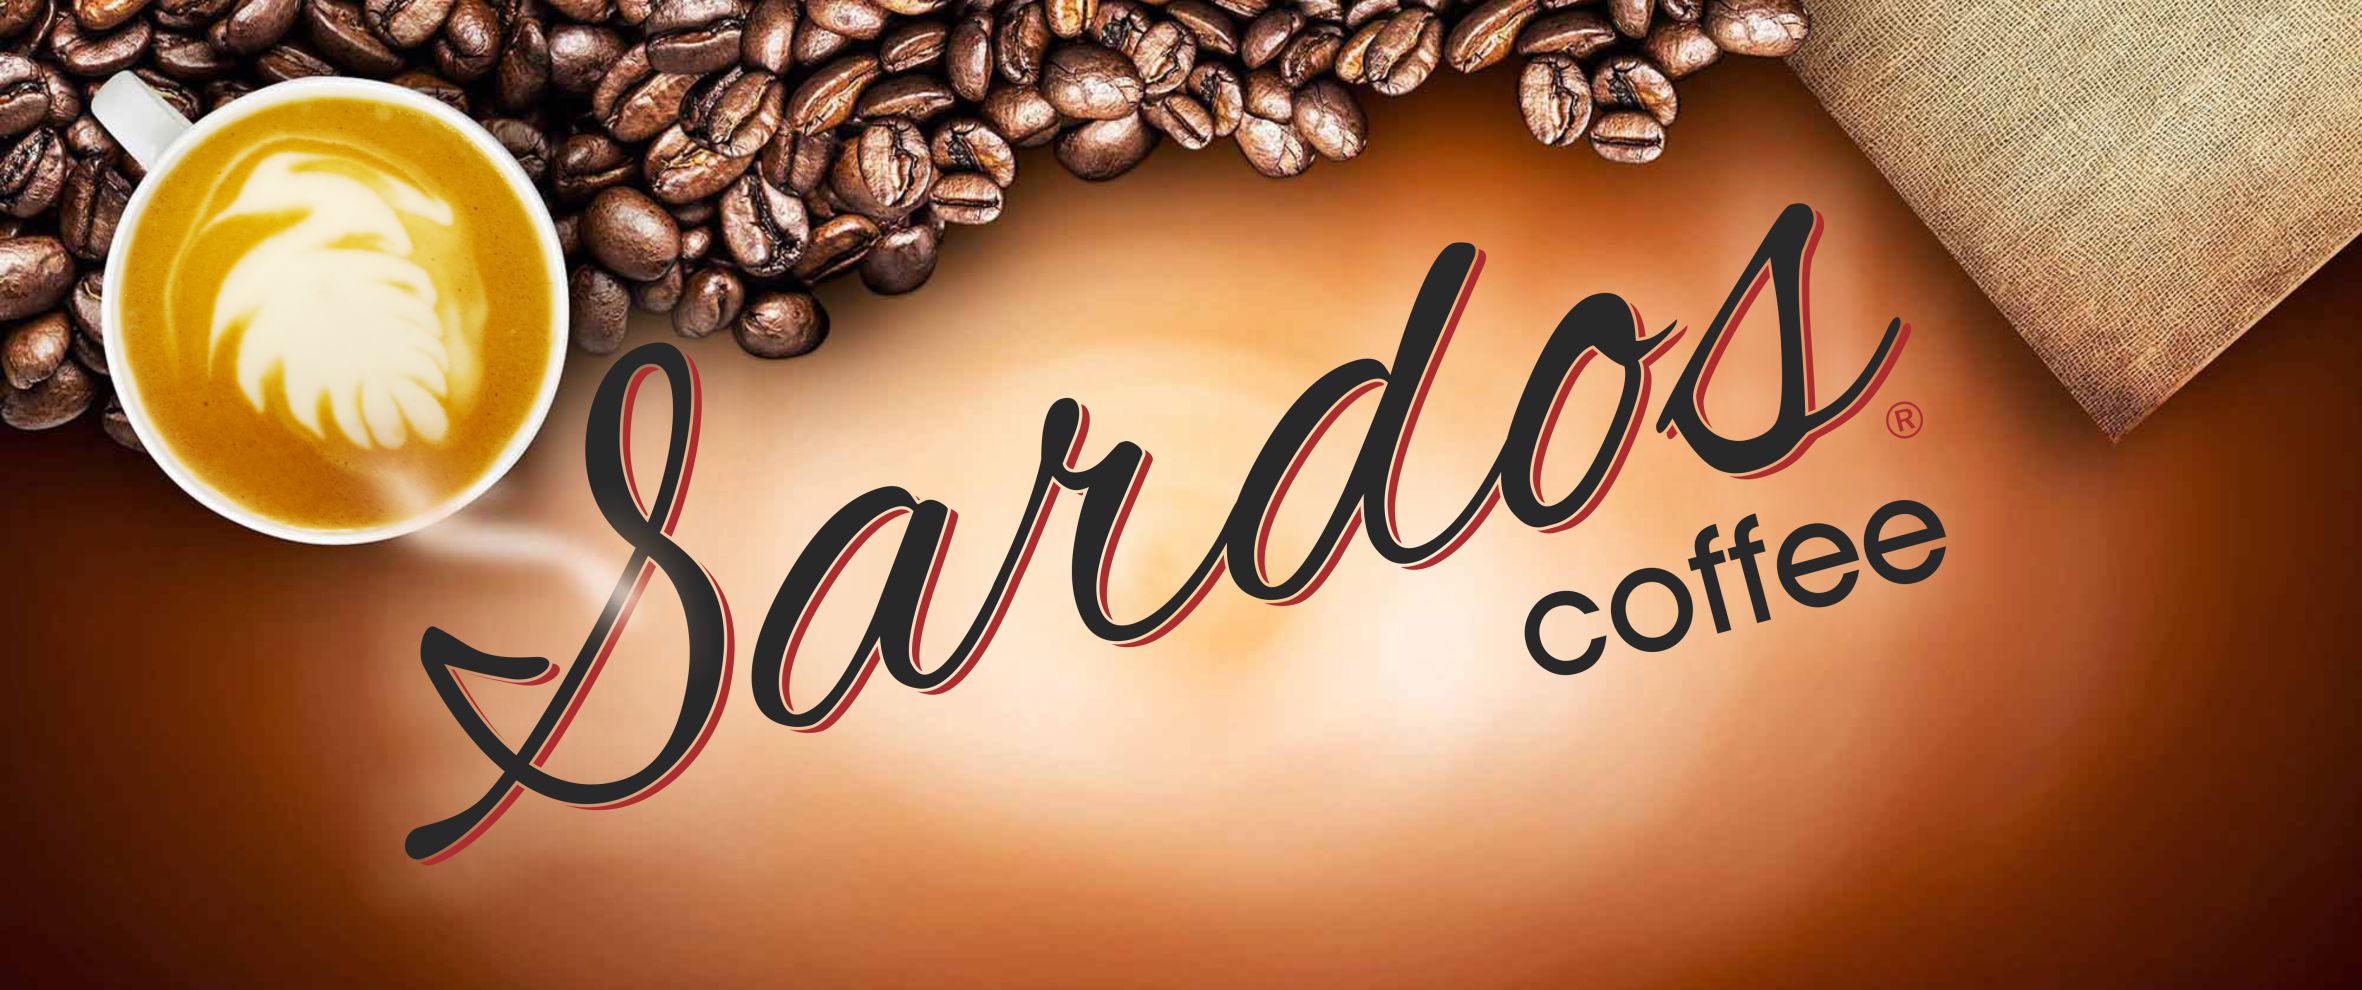 Sardos Coffee Banner